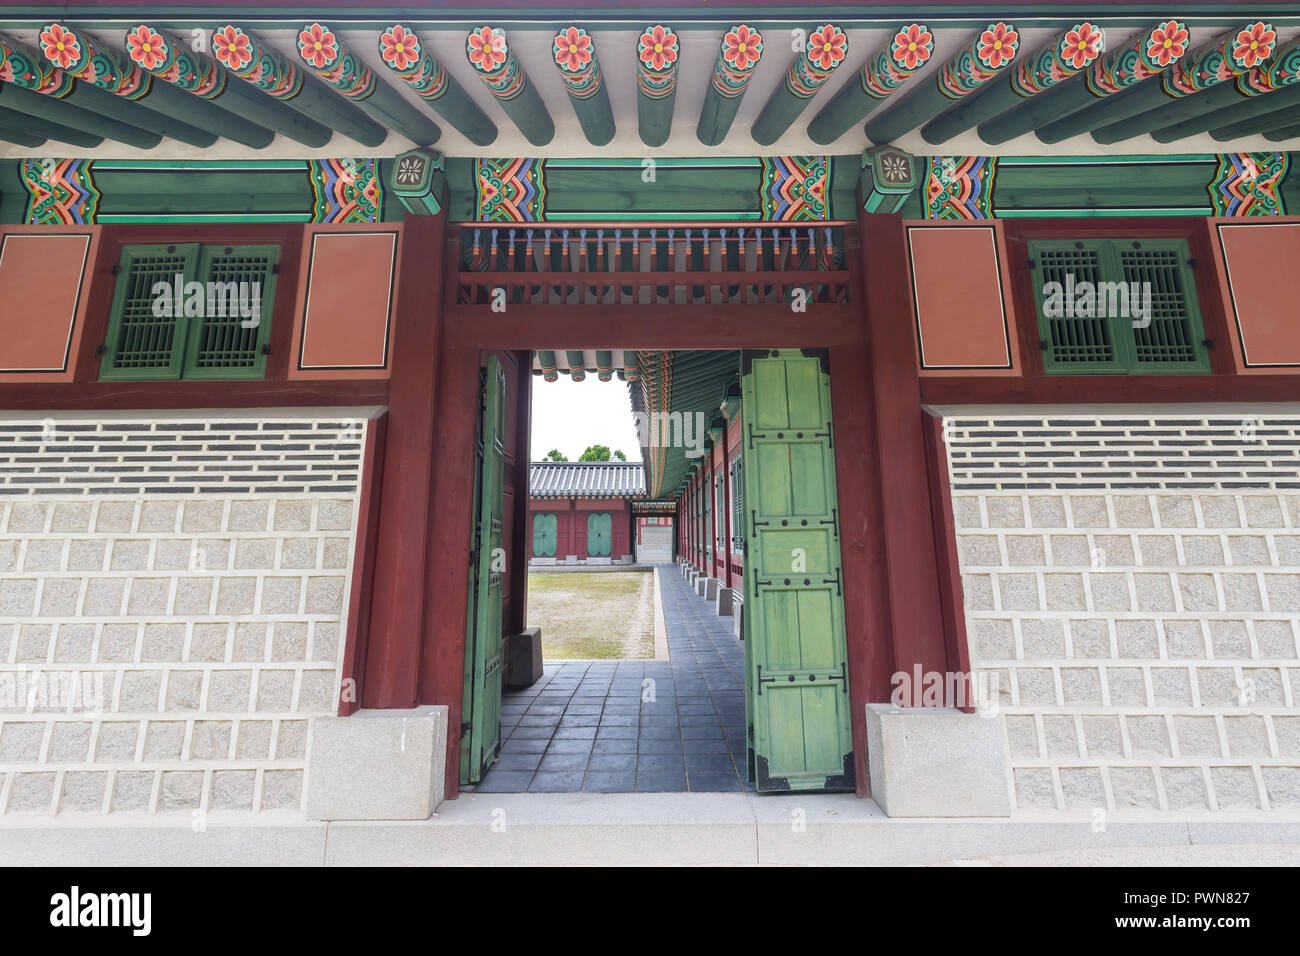 Building at Gyeongbokgung Palace in Seoul, South Korea Stock Photo